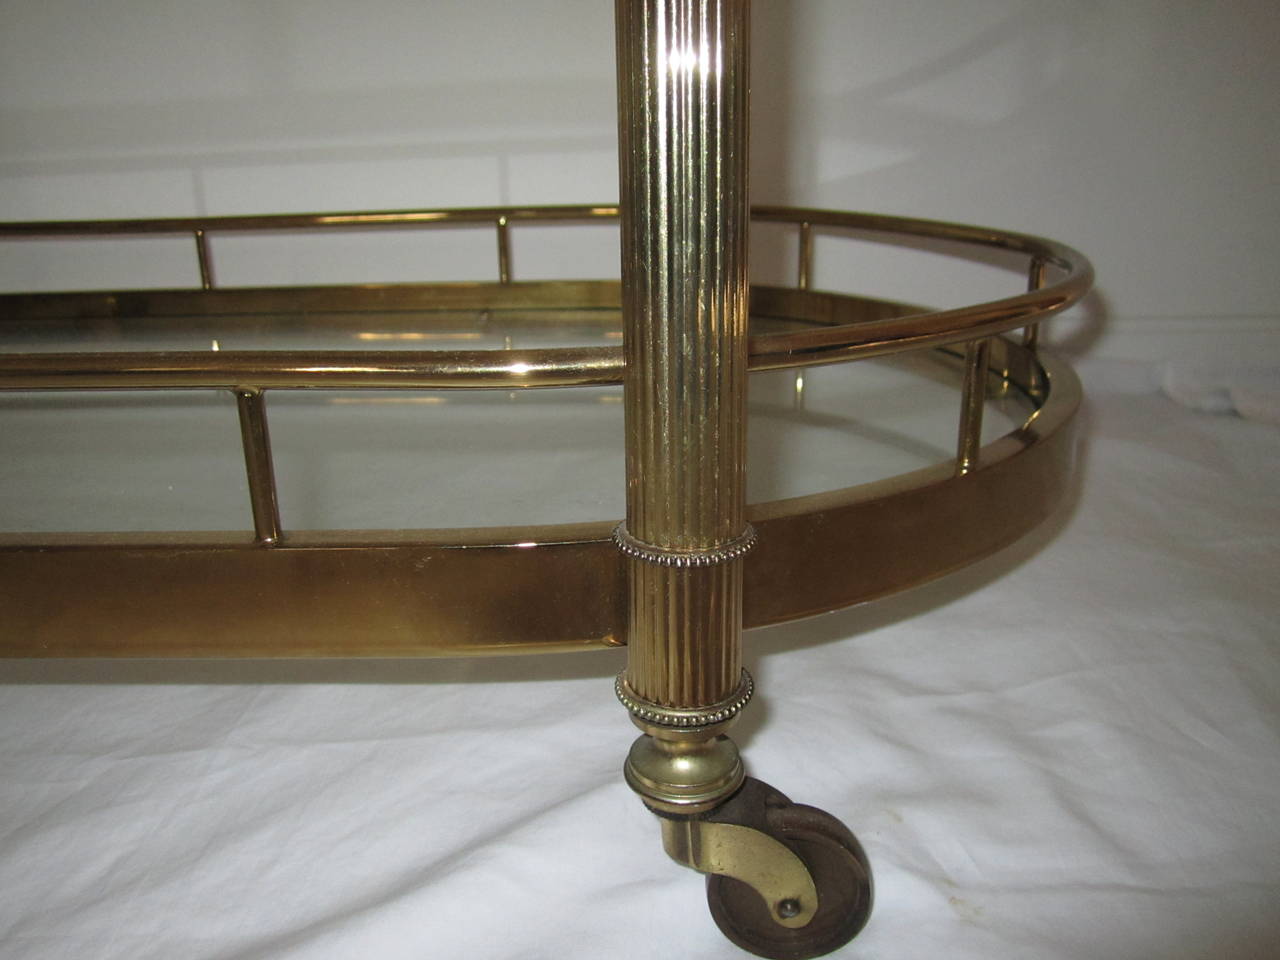 20th Century Vintage Brass Bar Cart Designed for the Design Institute of America